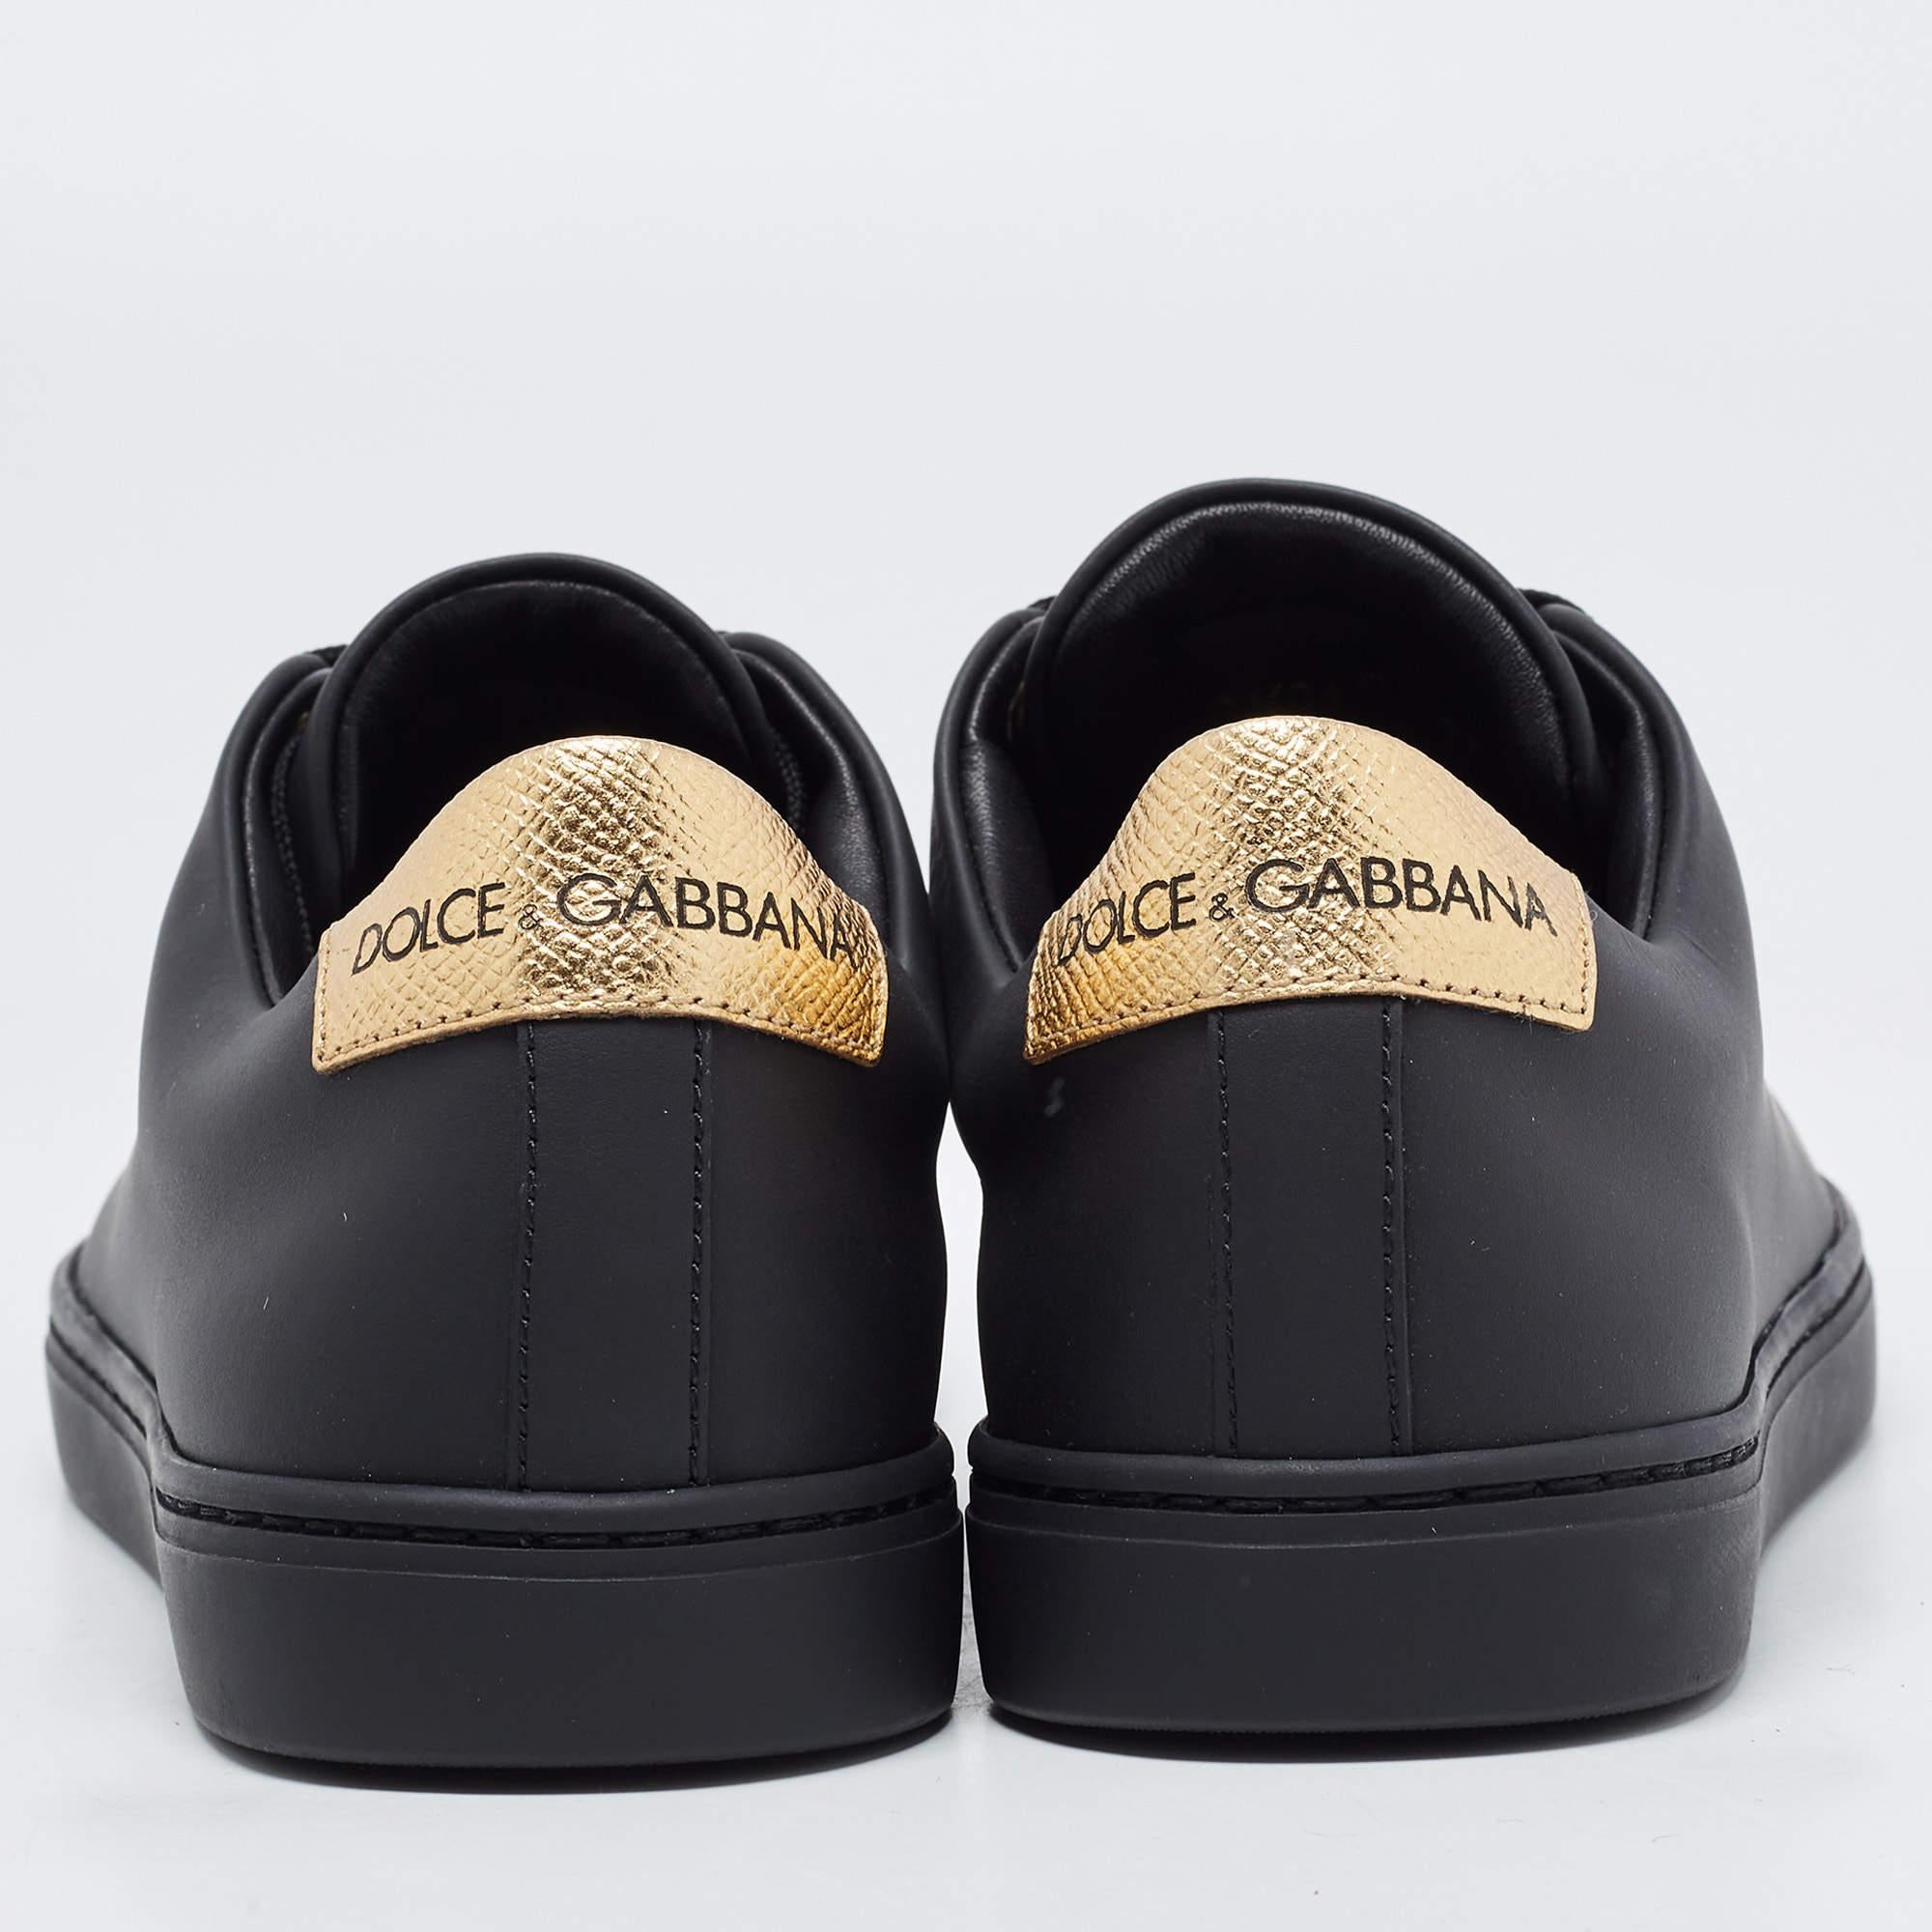 Dolce & Gabbana Black Leather Portofino Low Top Sneakers Size 37.5 4